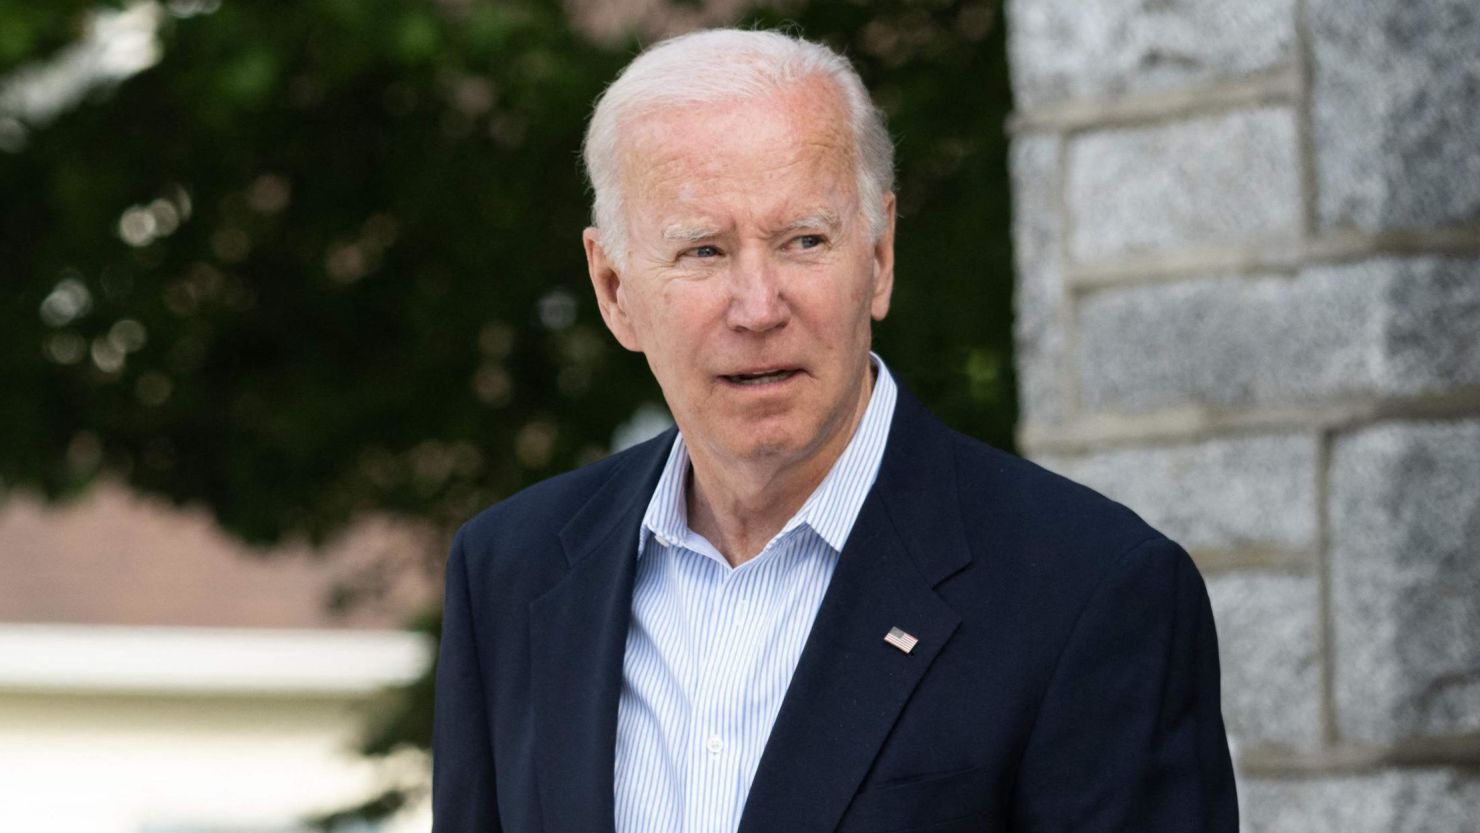 President Joe Biden departs St Edmonds Catholic Church in Rehoboth Beach, Delaware, on June 18, 2022.